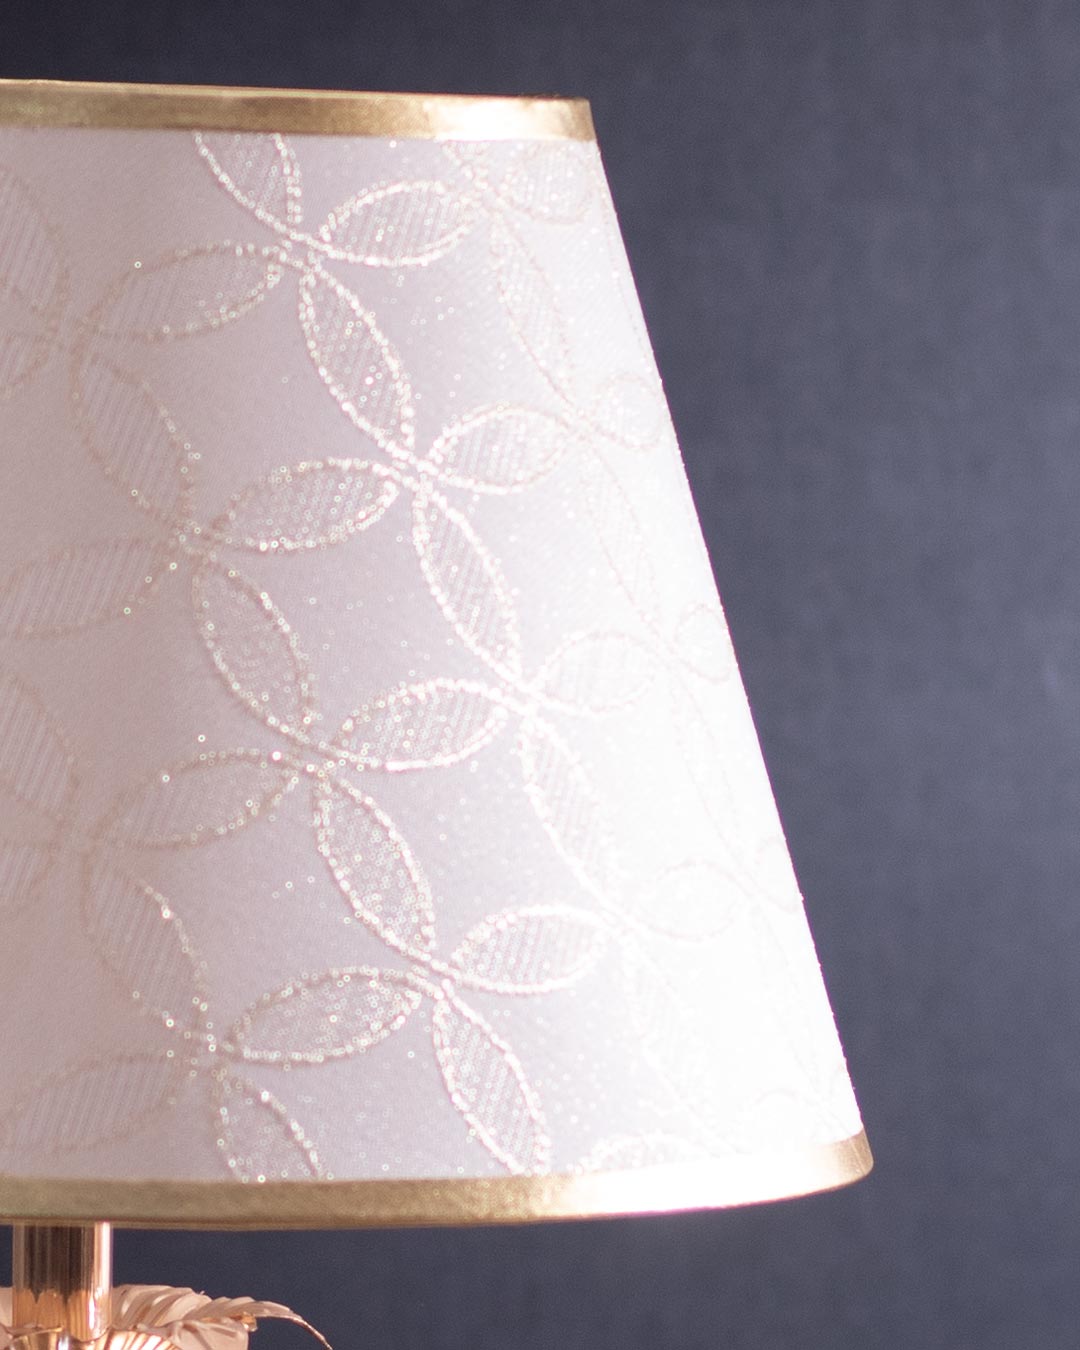 Sparkling Elegance: Crystal Table Lamp